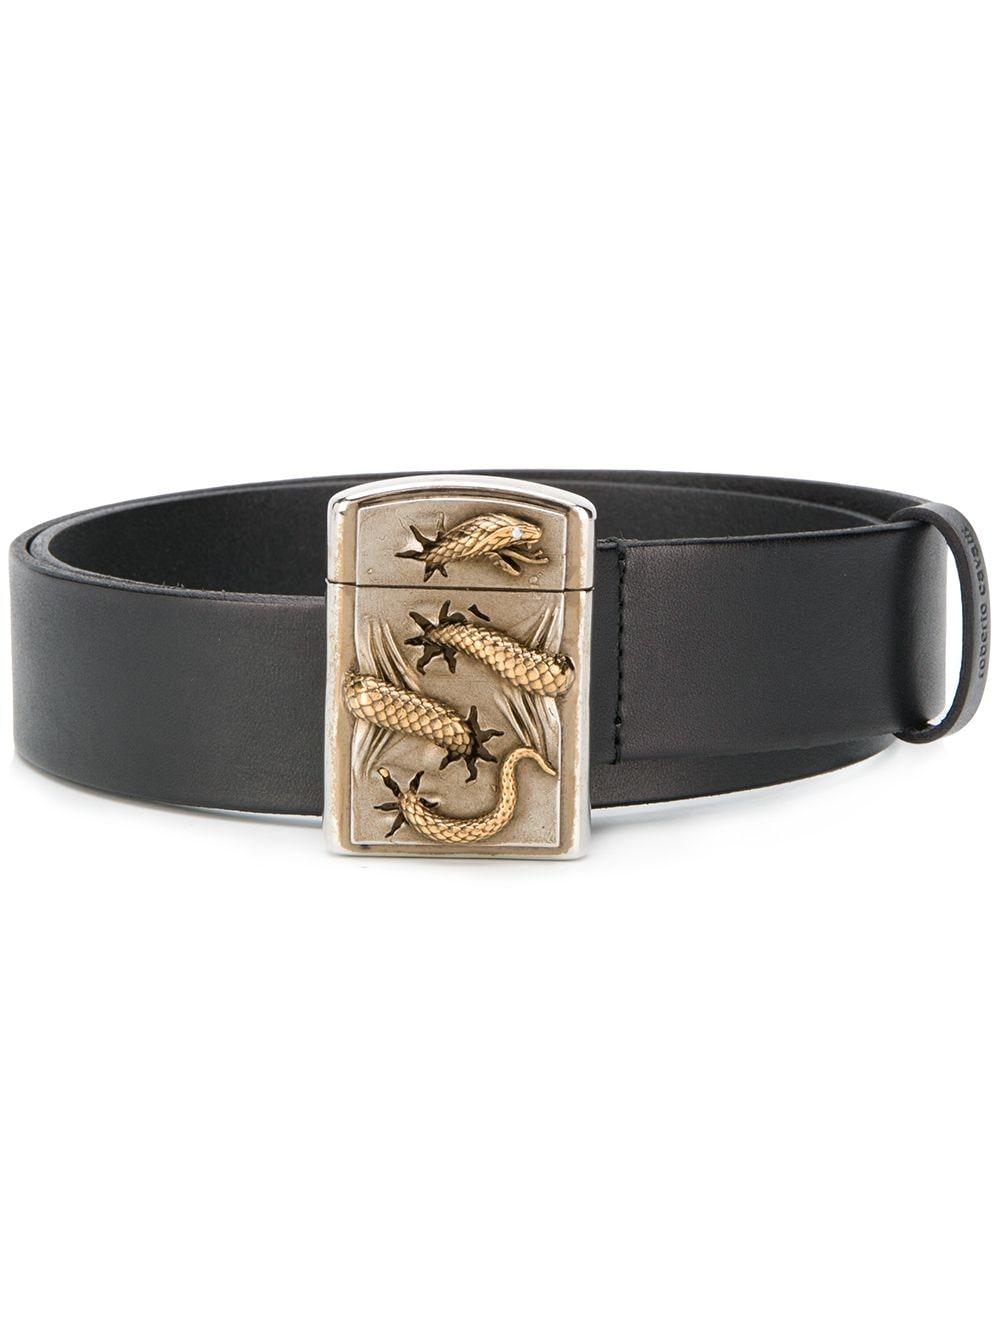 Roberto Cavalli Leather Snake Buckle Belt in Black for Men - Lyst